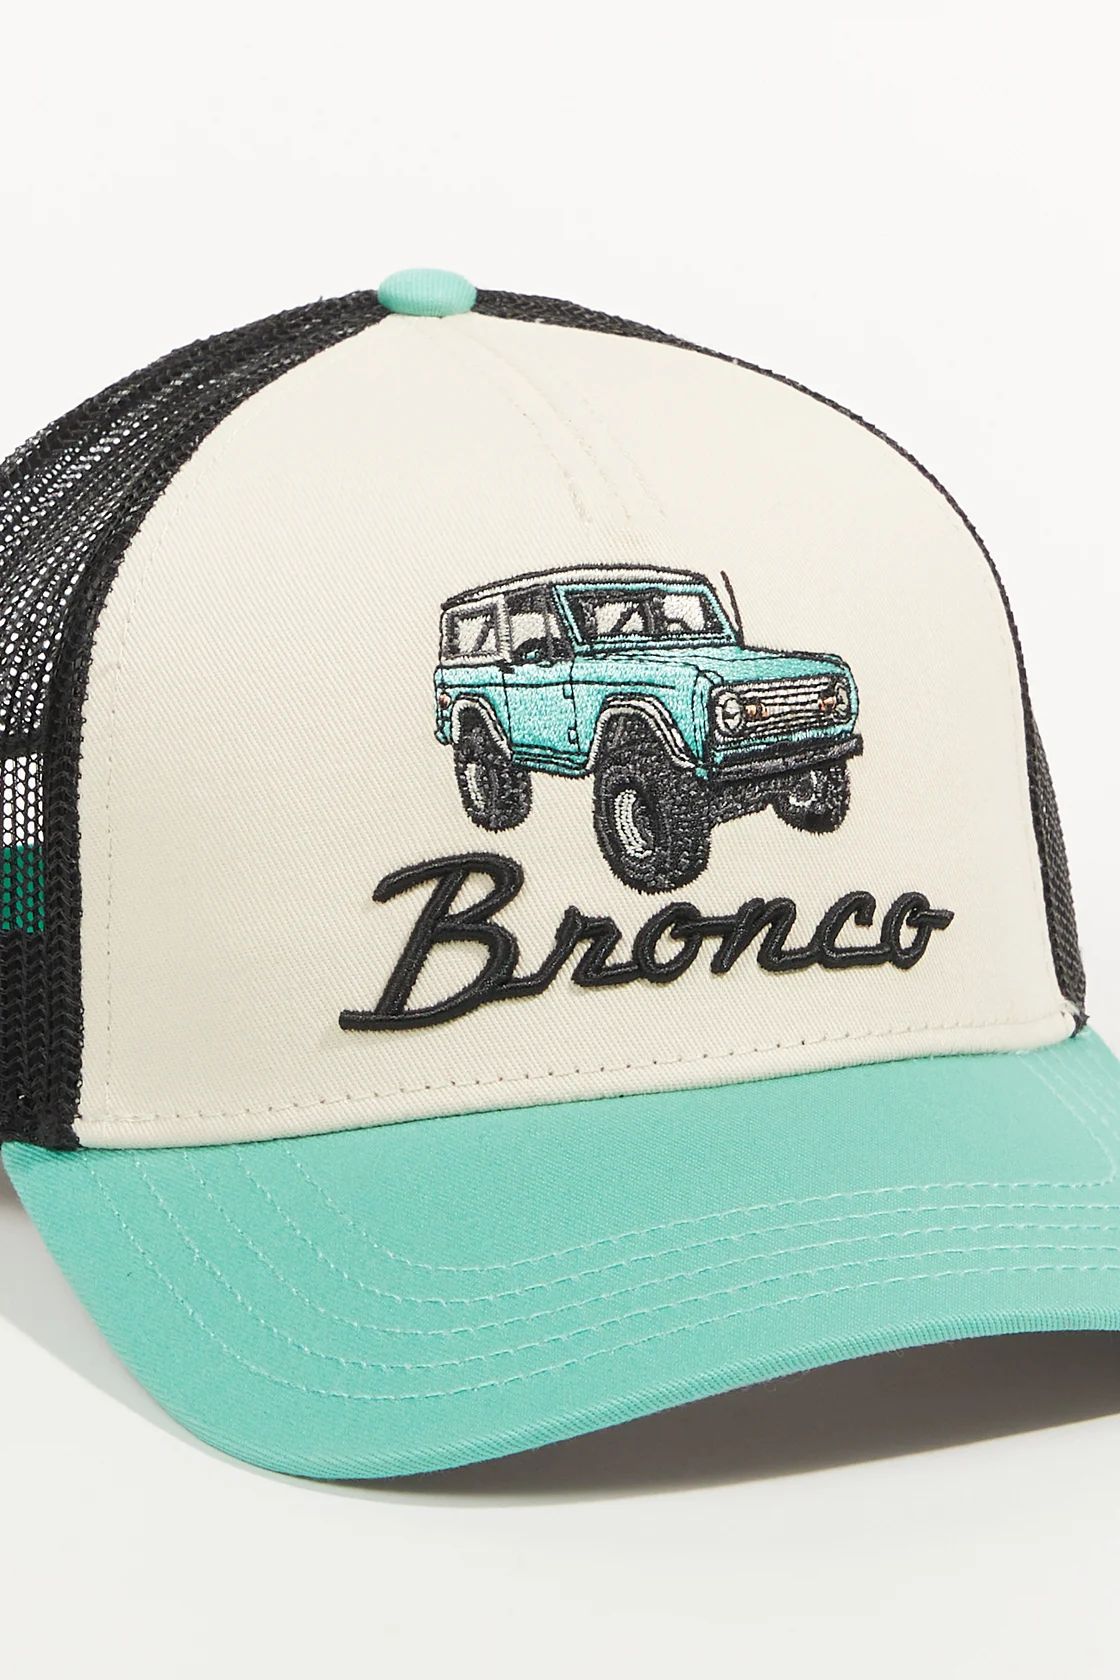 Bronco Trucker Hat | Altar'd State